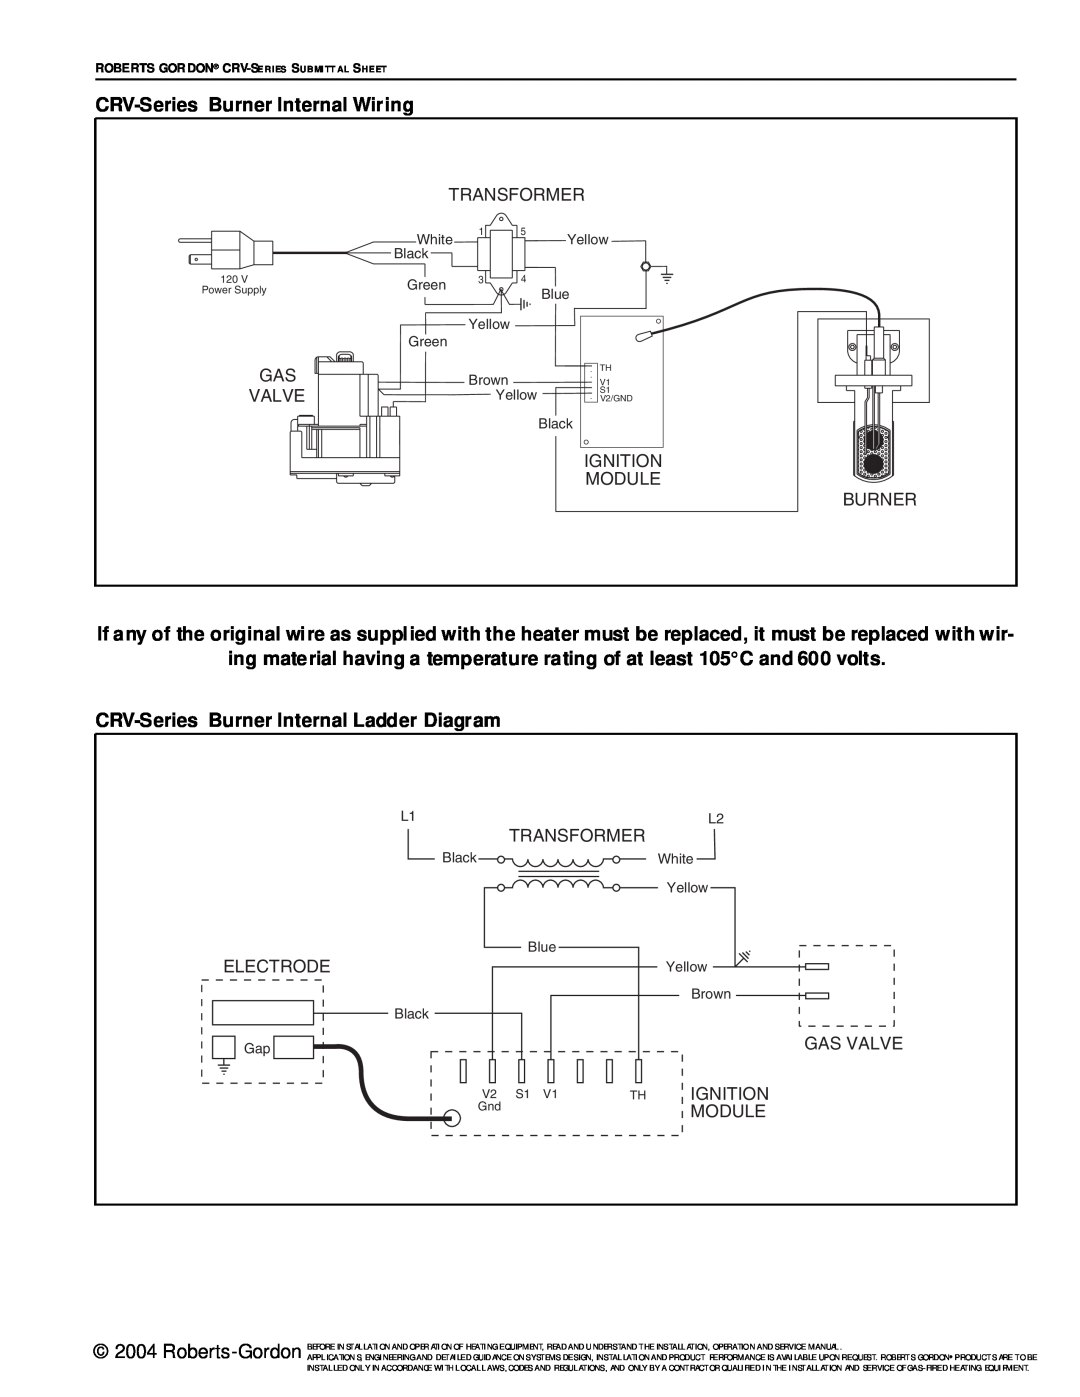 Roberts Gorden CRV-SeriesBurner Internal Wiring, CRV-SeriesBurner Internal Ladder Diagram, Transformer, Valve, Ignition 